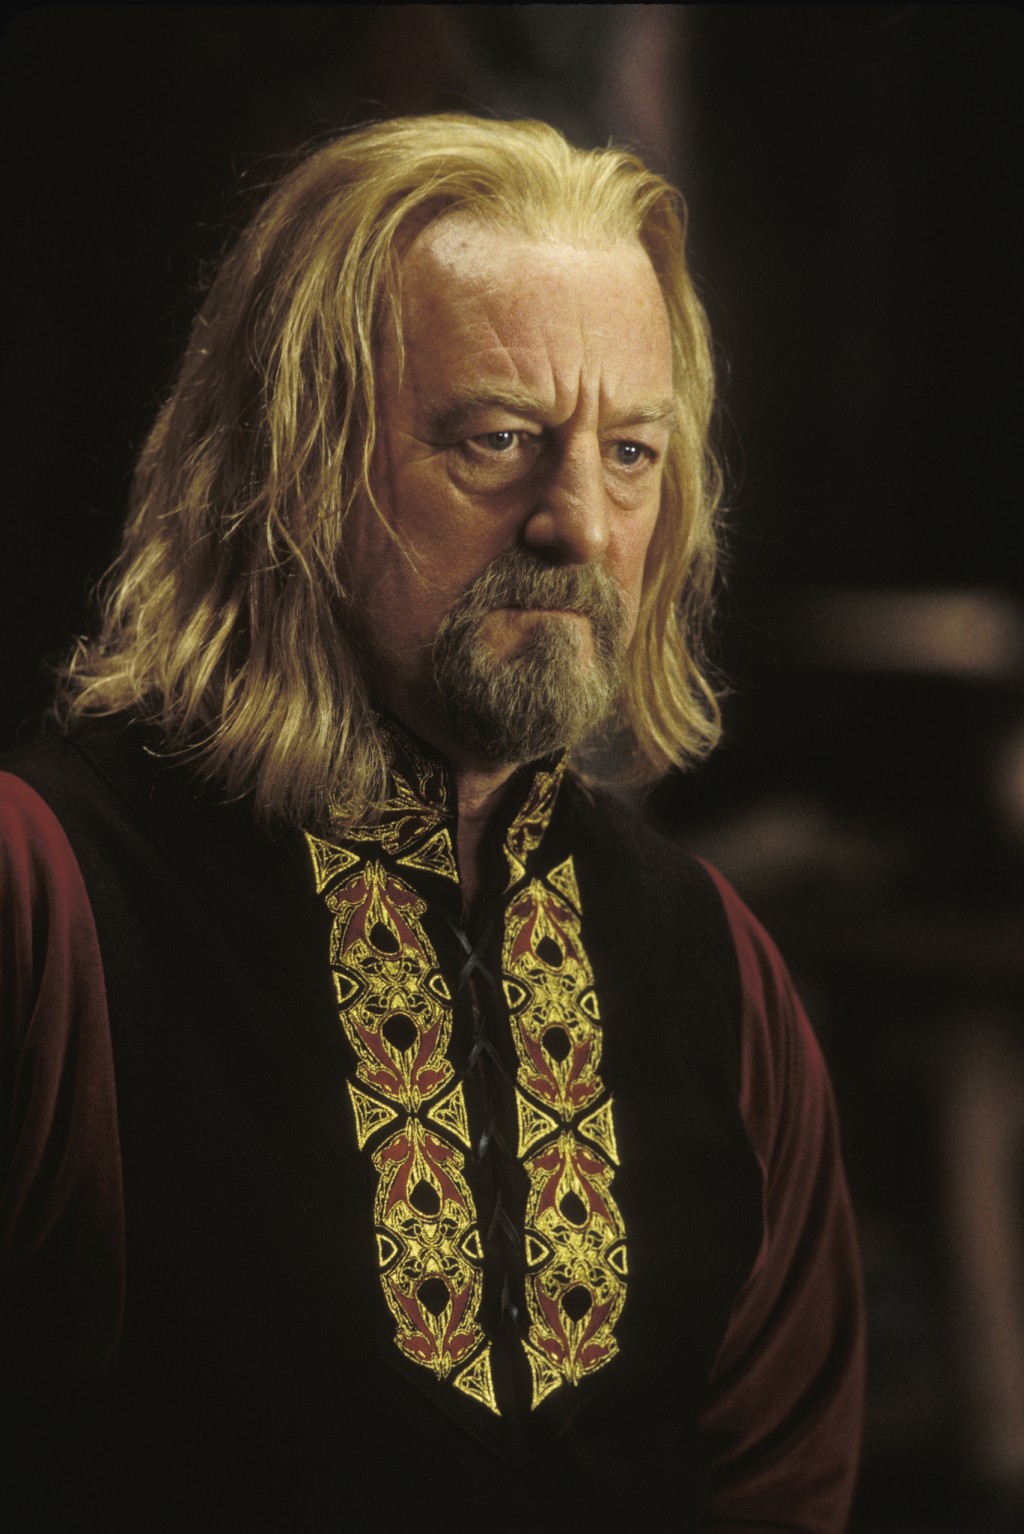 Bernard Hill在《魔戒》系列飾演希優頓國王。